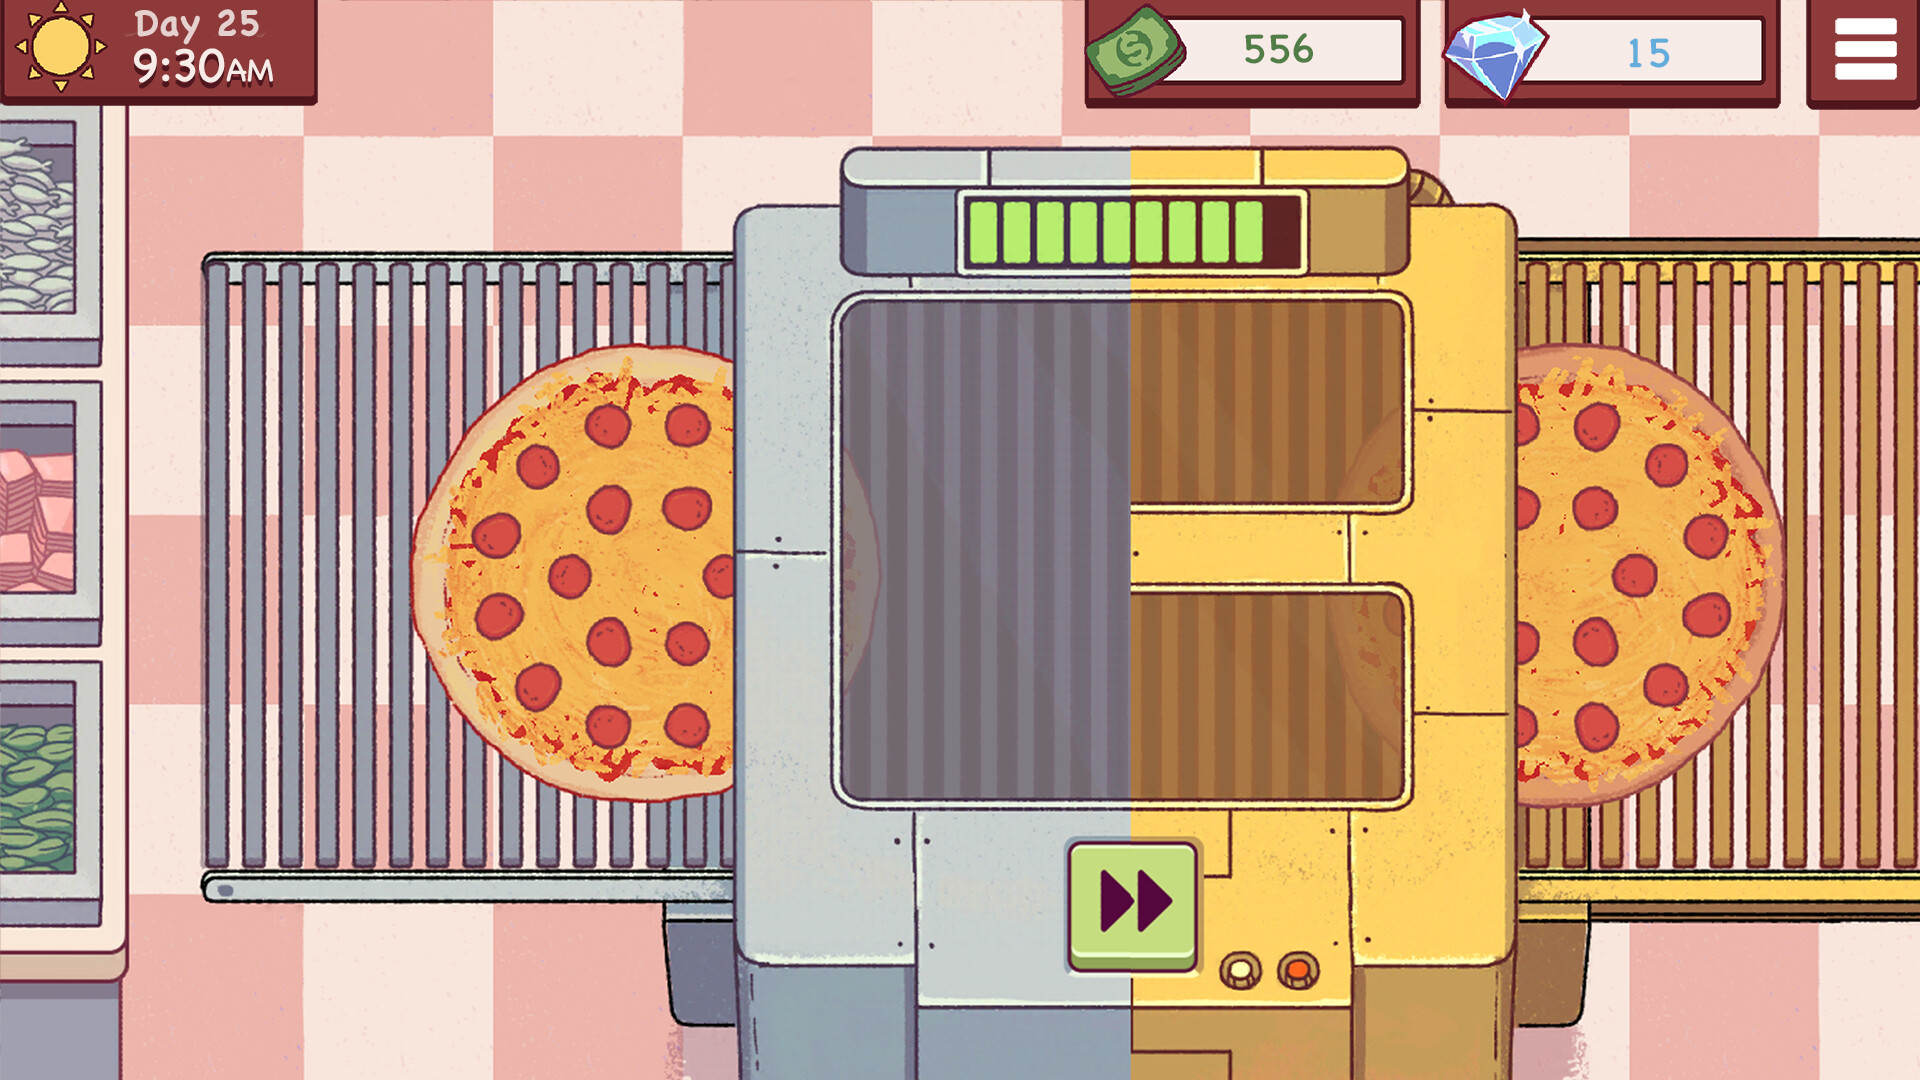 Good Pizza, Great Pizza - Jogue Online em SilverGames 🕹️